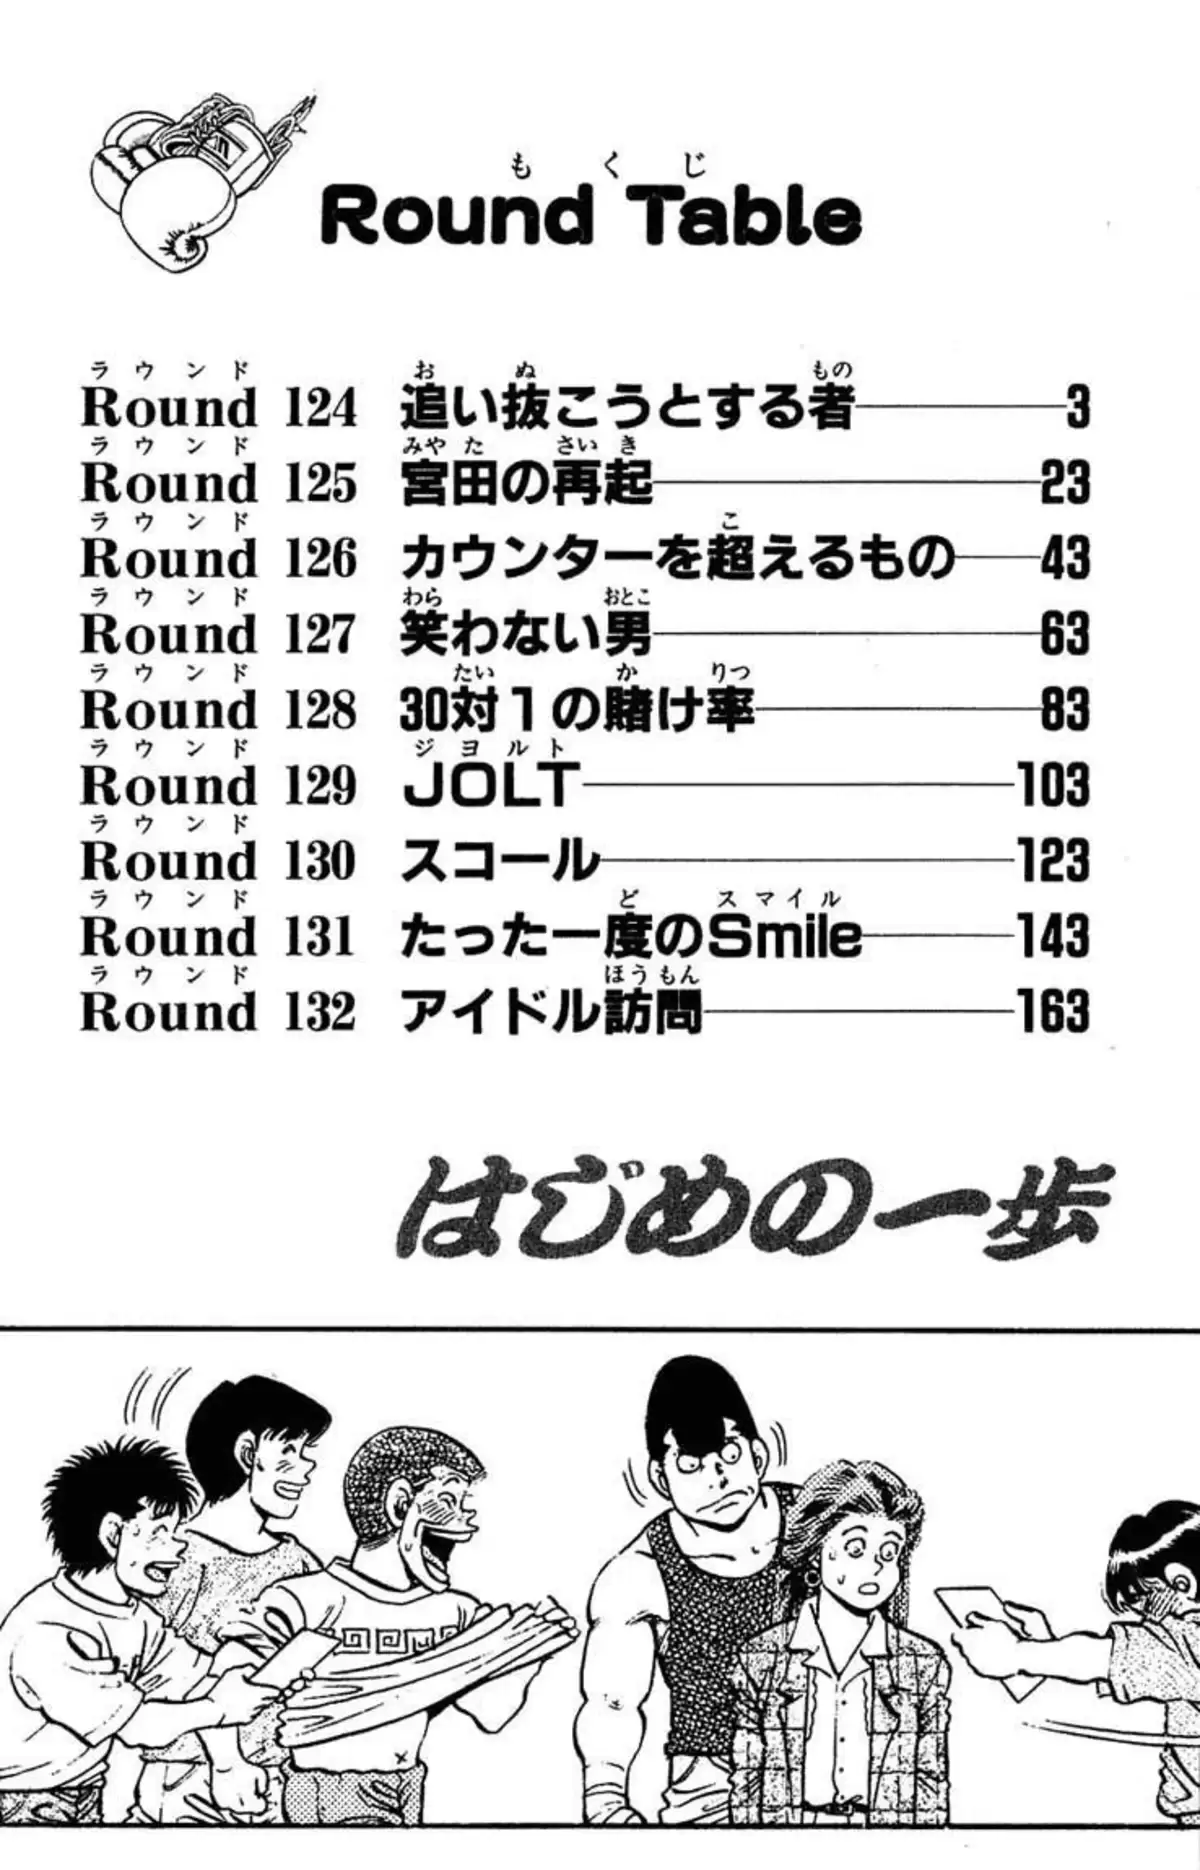 Hajime no Ippo Volume 15 page 3